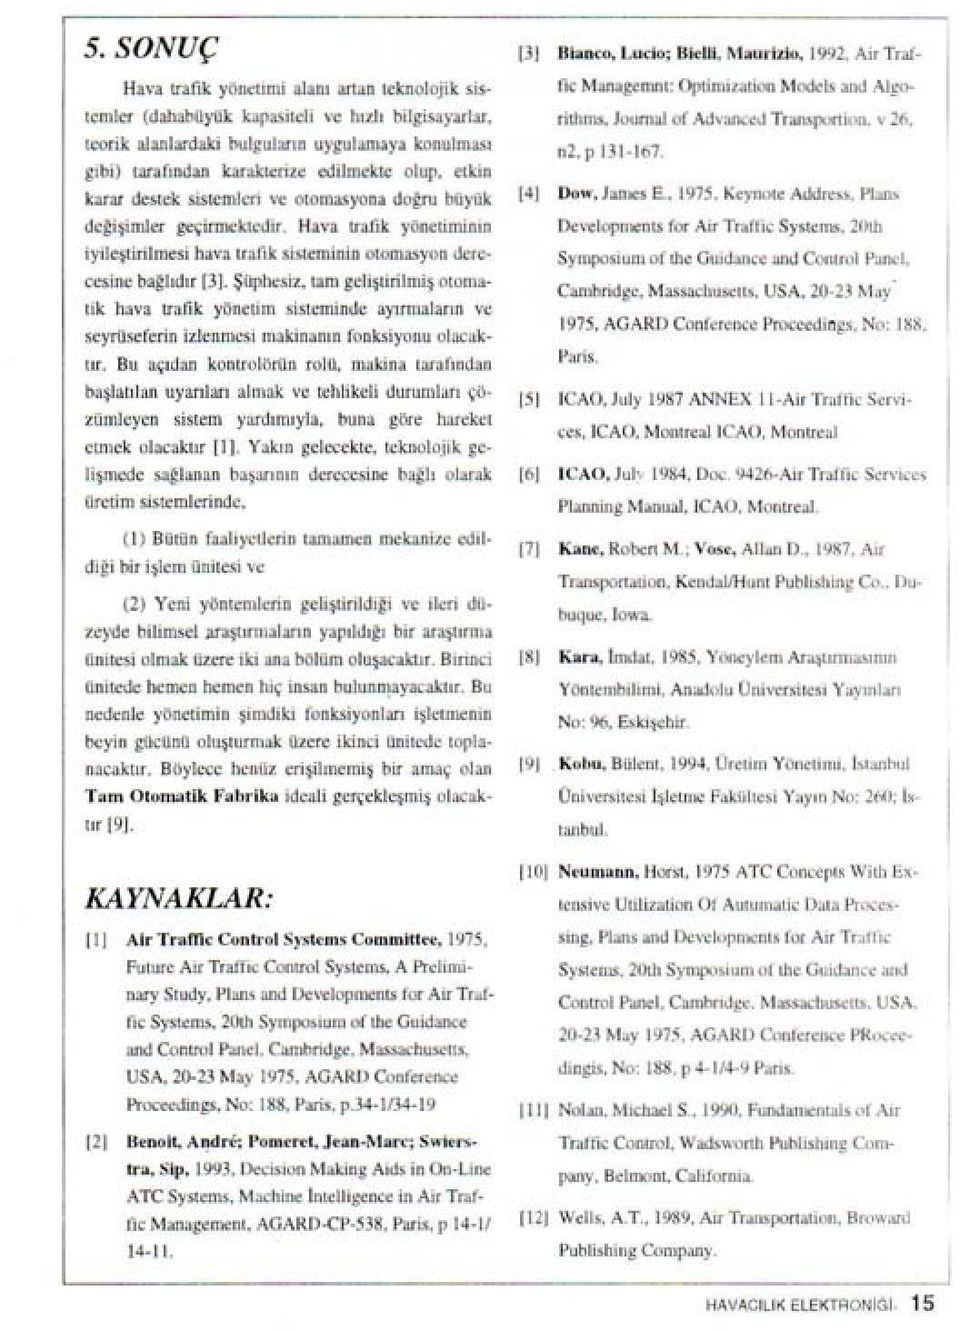 Hava trafk yönetmnn rthms, Journal of Advanced Transporton. \' 26, n2, p 131-167. Dow. James E.. 1975, Keynoıe Address. Plans De\'elopınenlS for Ar Trdffc Systcms.